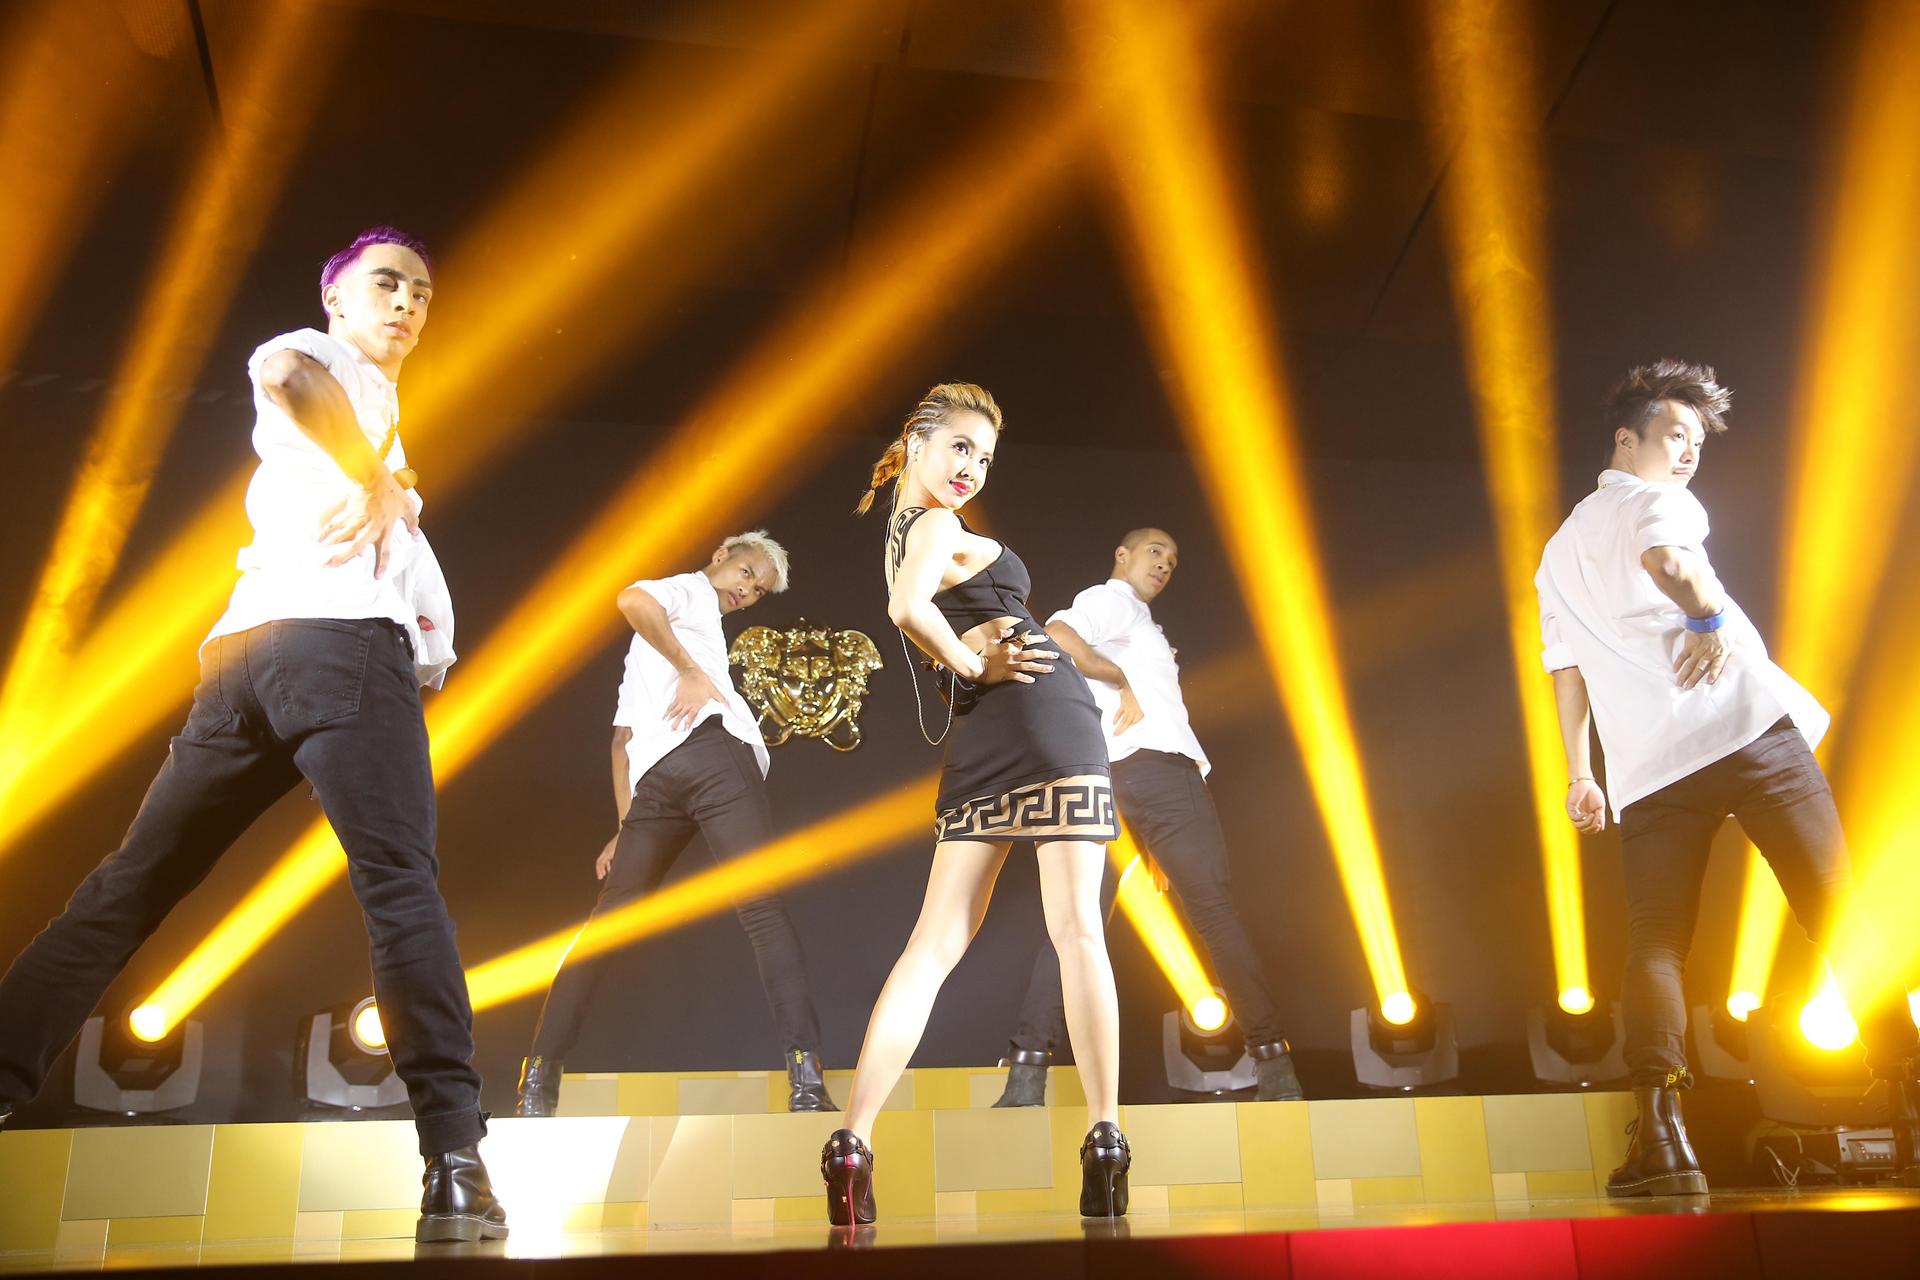 Taiwanese diva Jolin Tsai gave an impressive performance at the opening party